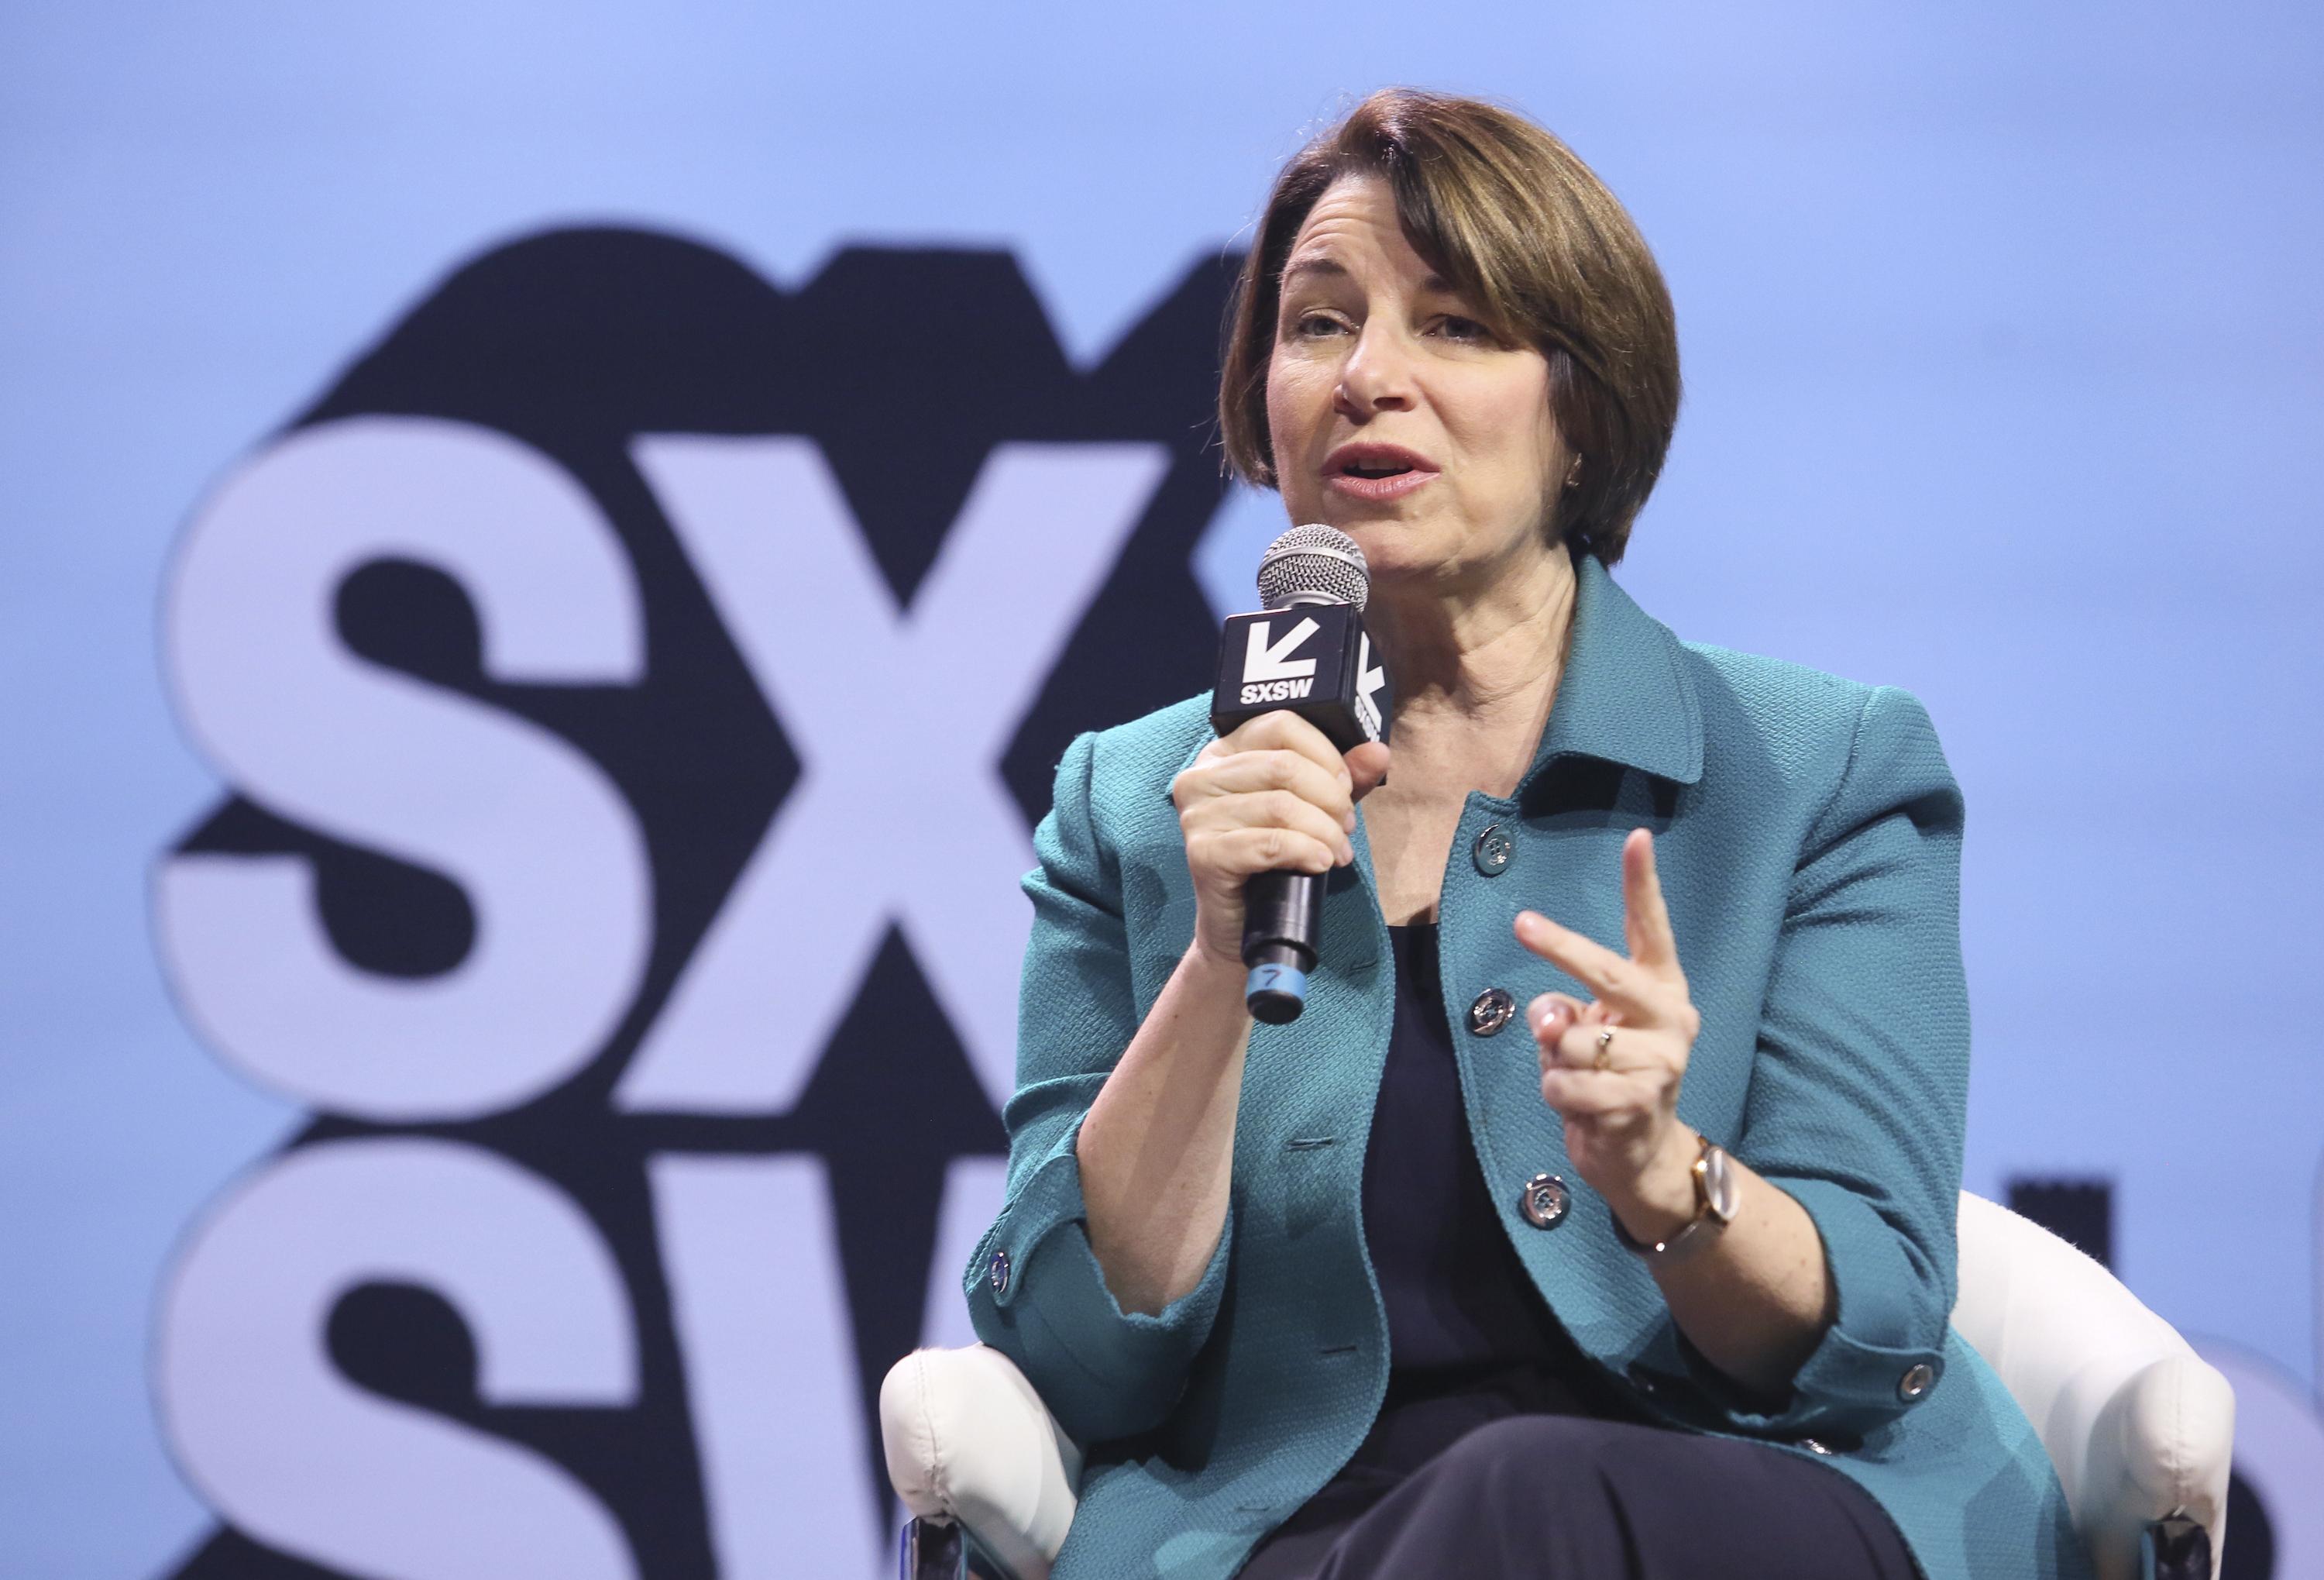 2020 Democrats flock to trendy SXSW festival in Austin, Texas | The Spokesman-Review